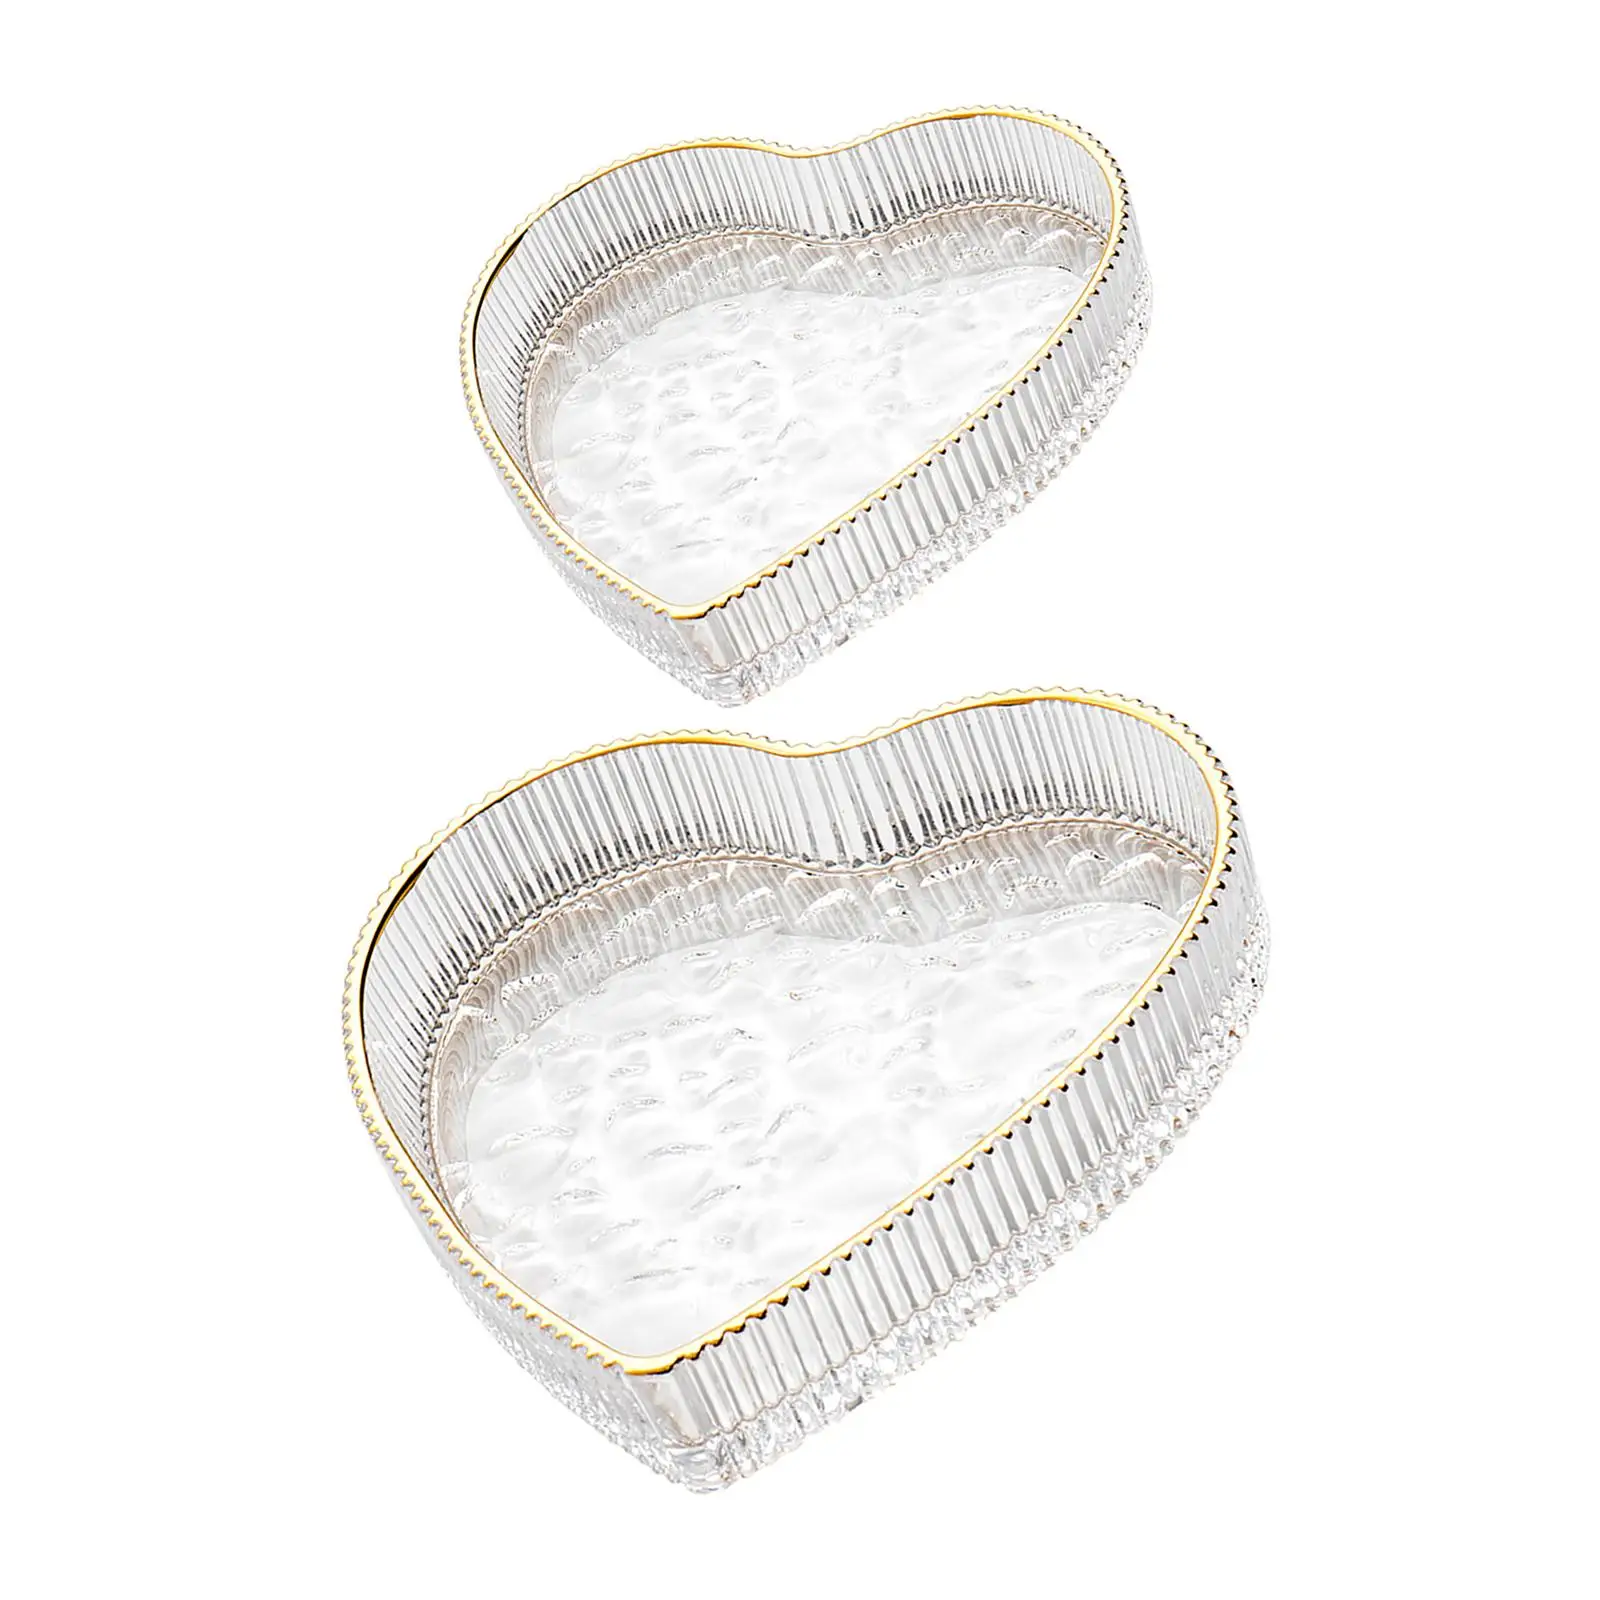 Multifunctional Glass Jewelry Dish Tray Heart Shaped Bracelet Holder Snacks Fruit Plate Tea Tray Cosmetic Organizer Trinket Dish